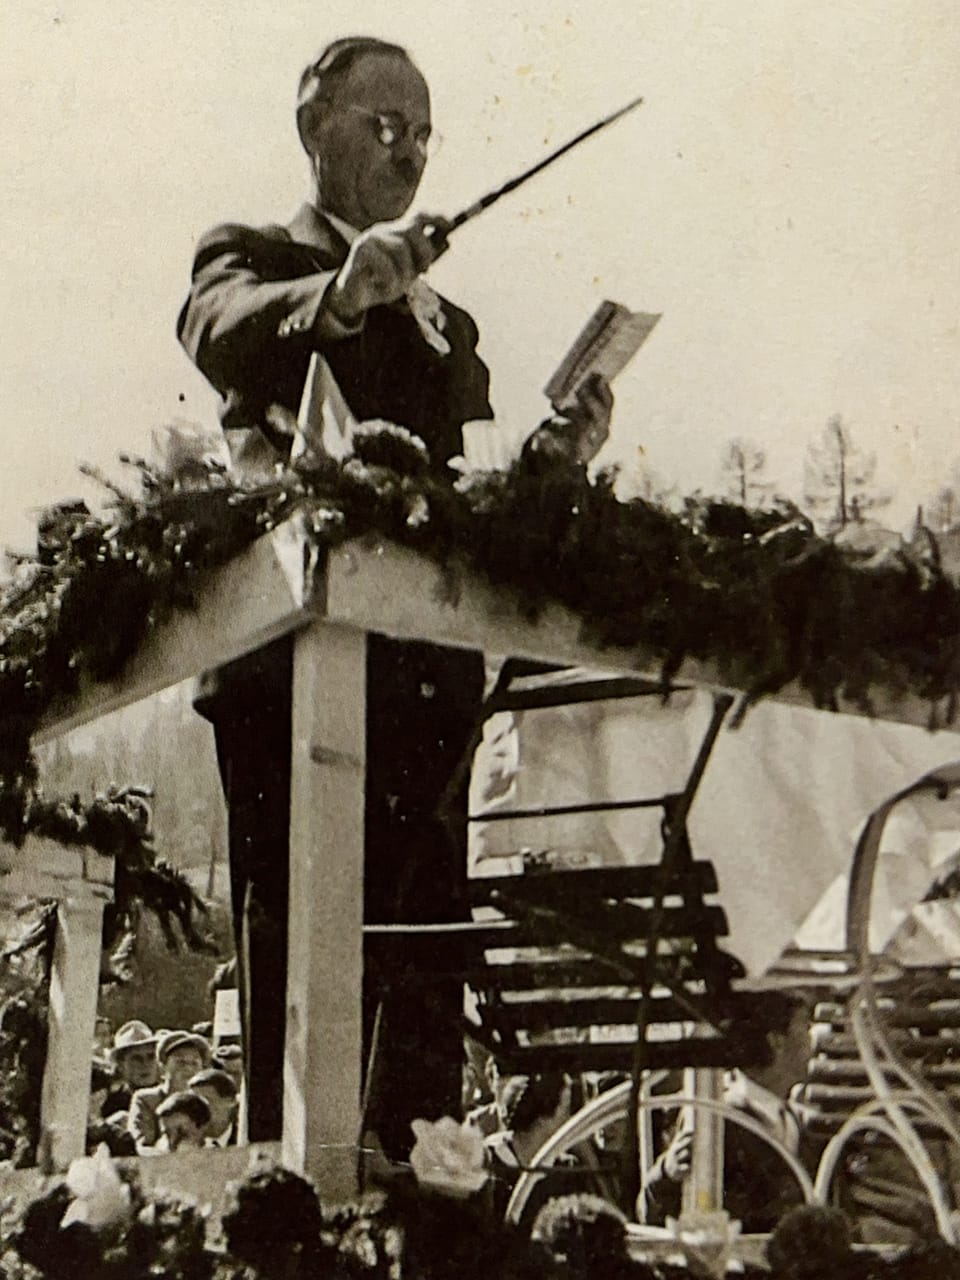 Giacumin Morell, Dirigent in Susch am Gesangsfest im 1949.